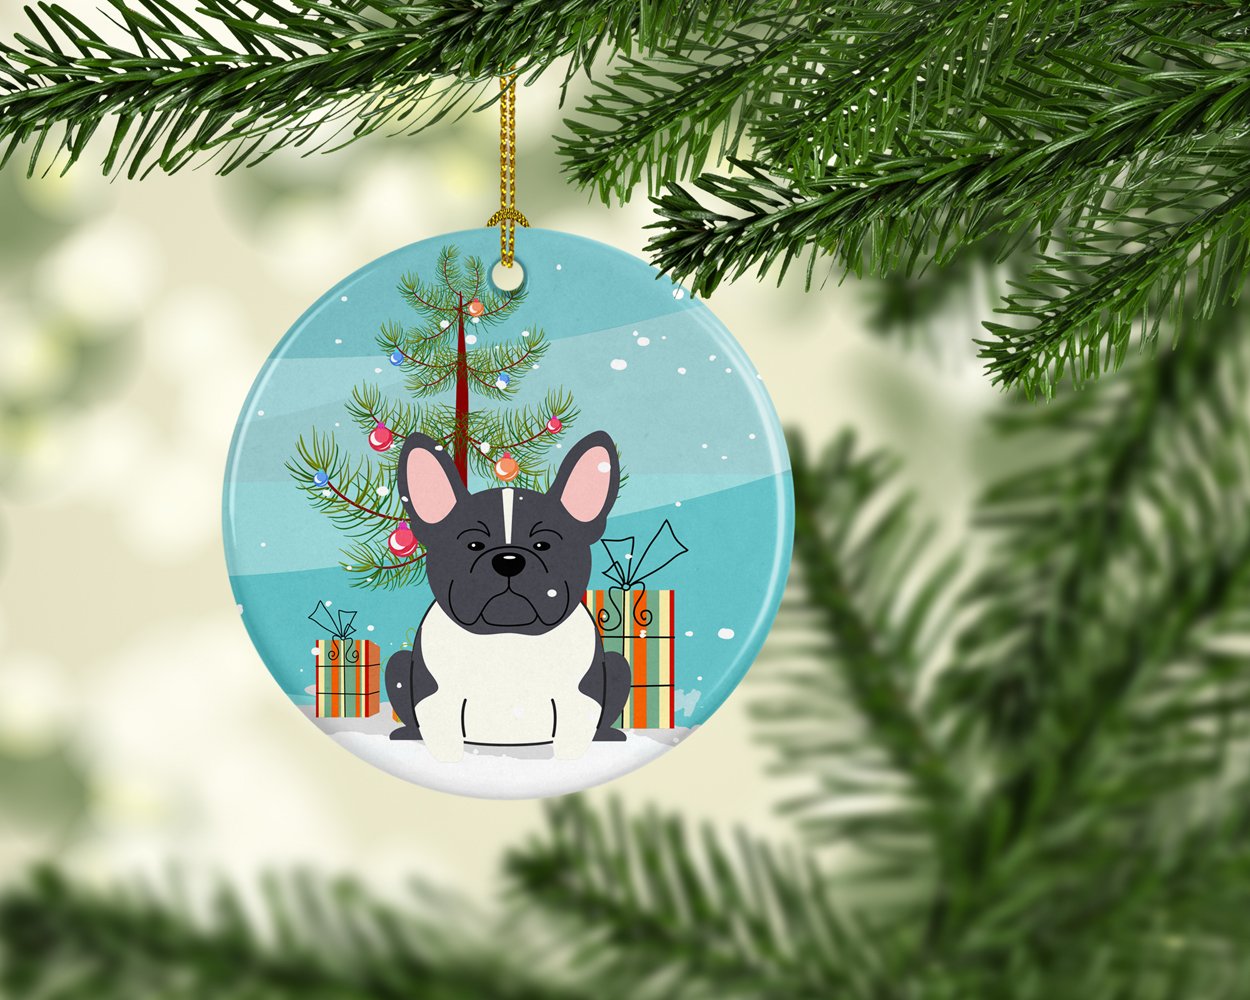 Merry Christmas Tree French Bulldog Black White Ceramic Ornament BB4137CO1 by Caroline's Treasures